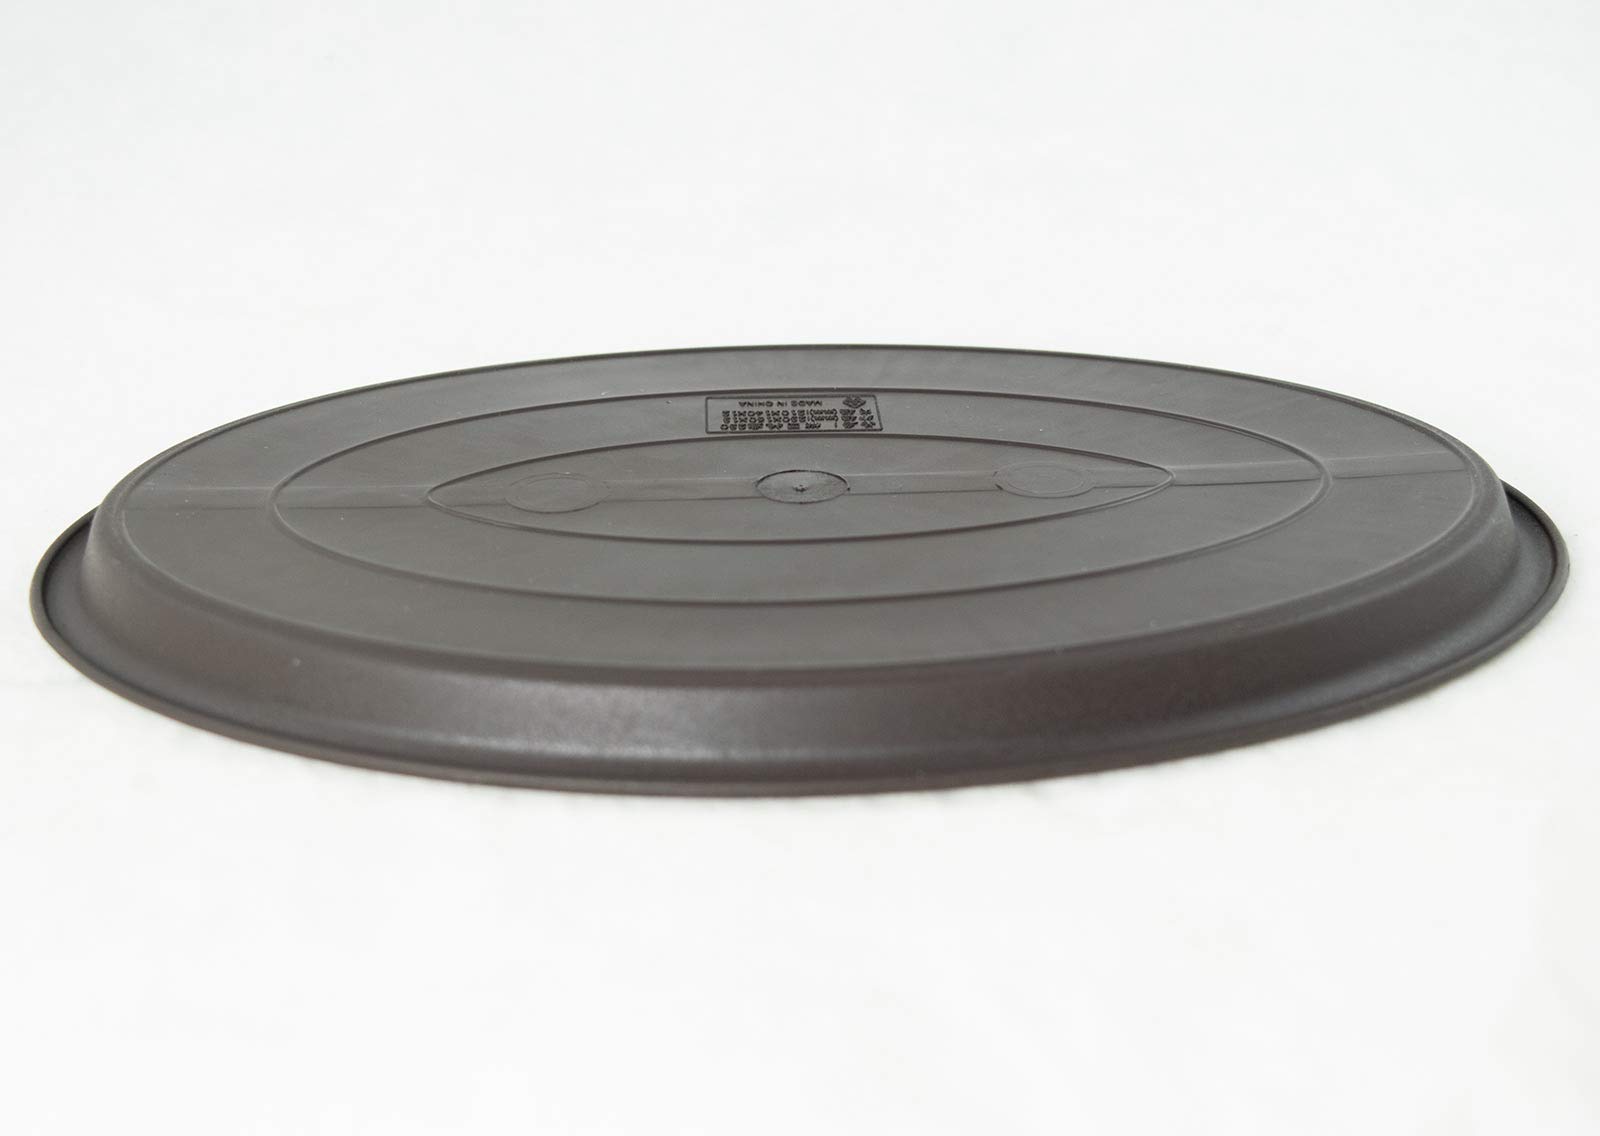 Oval Plastic Humidity/Drip Tray for Bonsai Tree 10.75"x 7.5"x 0.5" - Brown